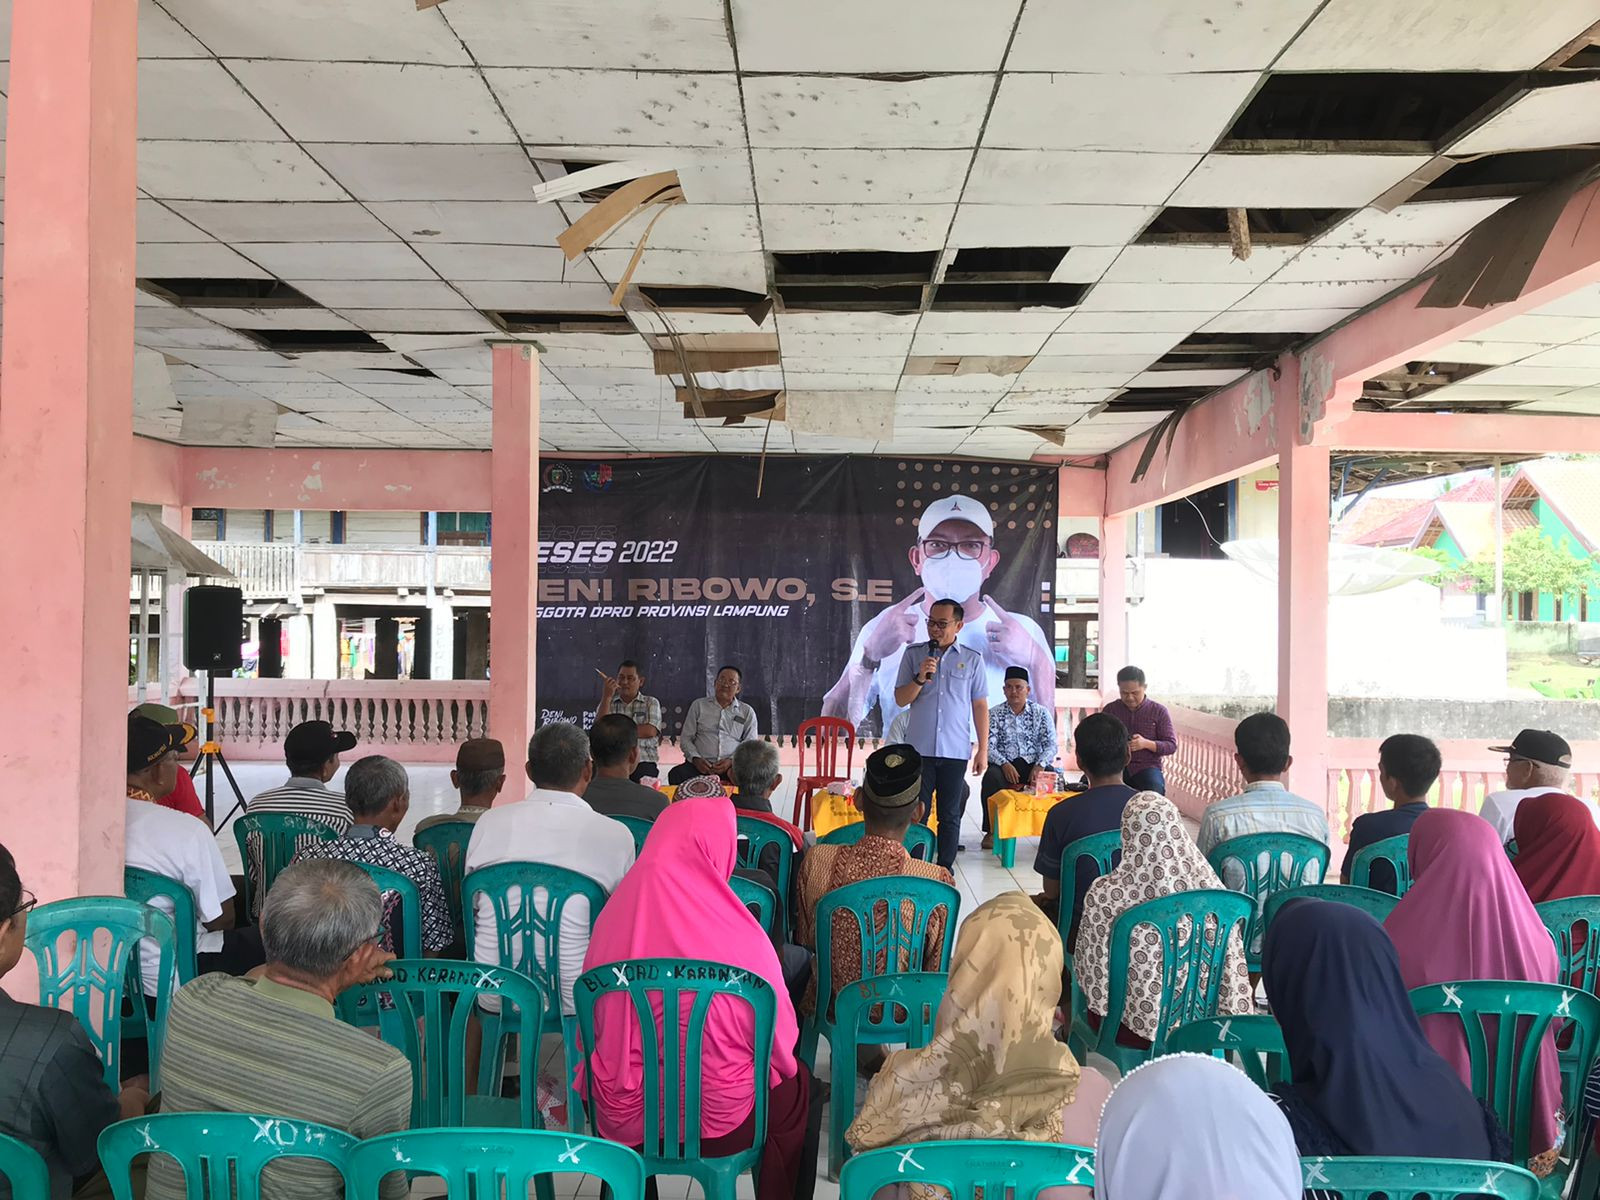 Masyarakat Way Kanan Keluhkan Pupuk Subsidi, Nih Rencana Deni Ribowo Membantu Warga - JPNN.com Lampung